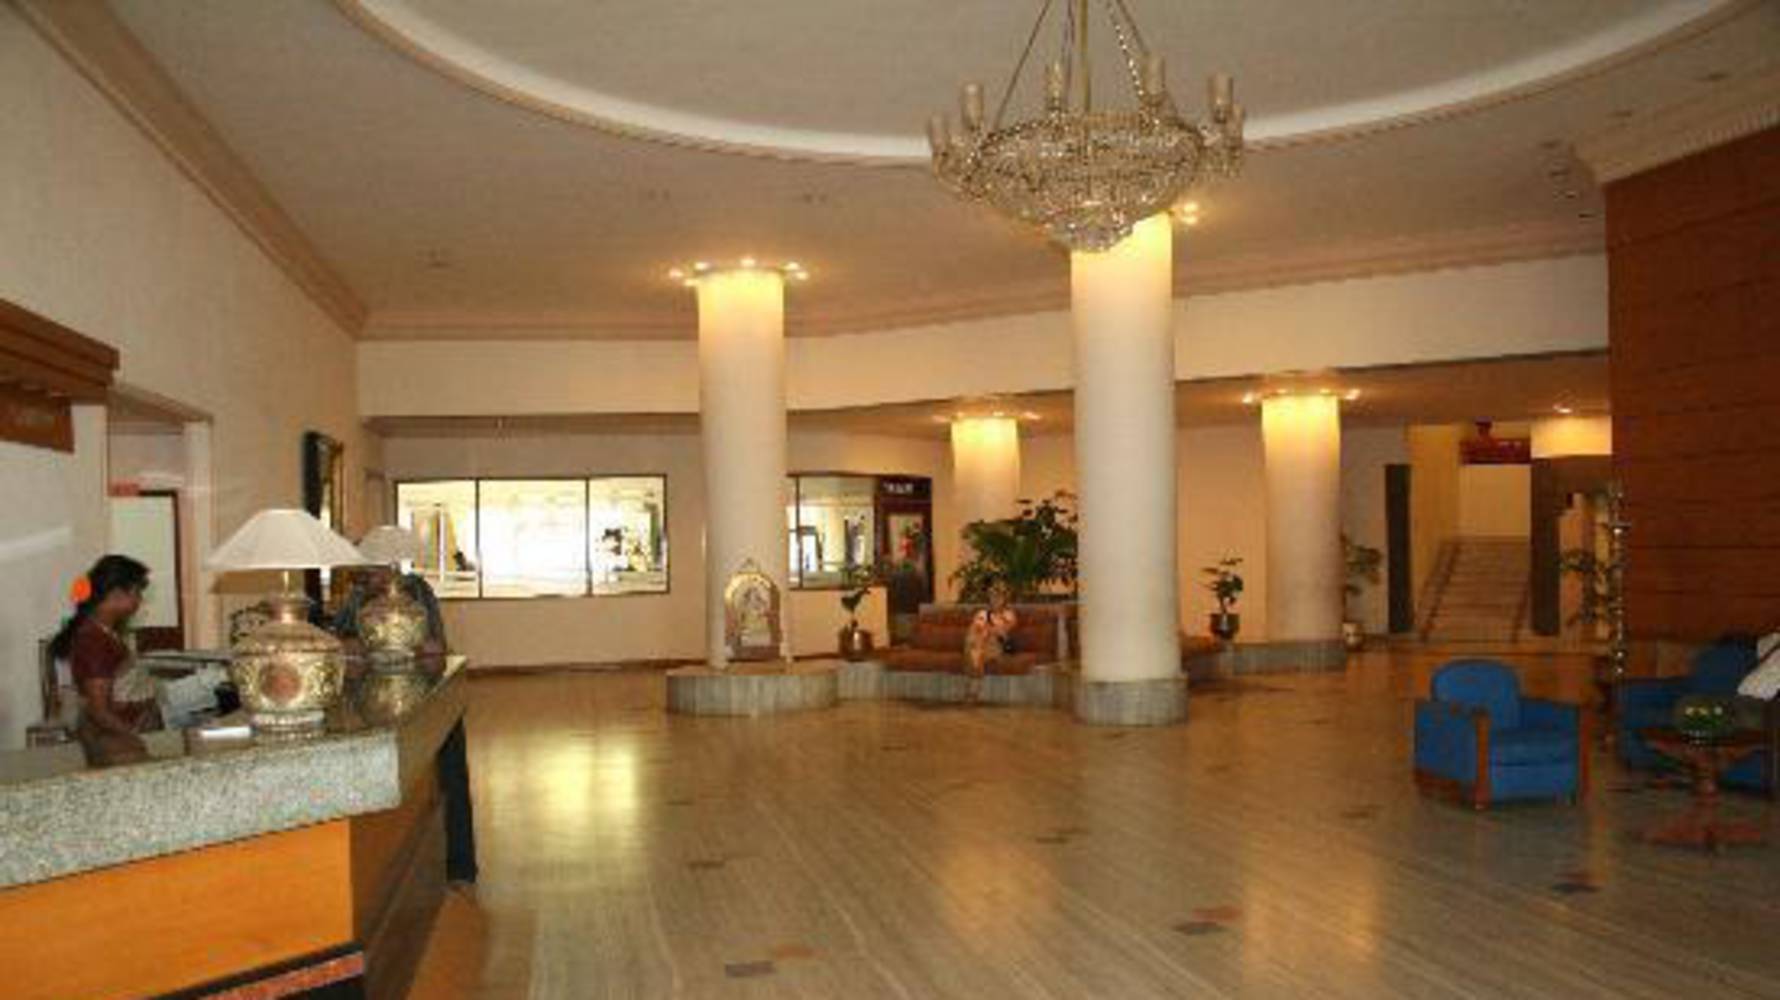 Hotel_Sangam-_Reception